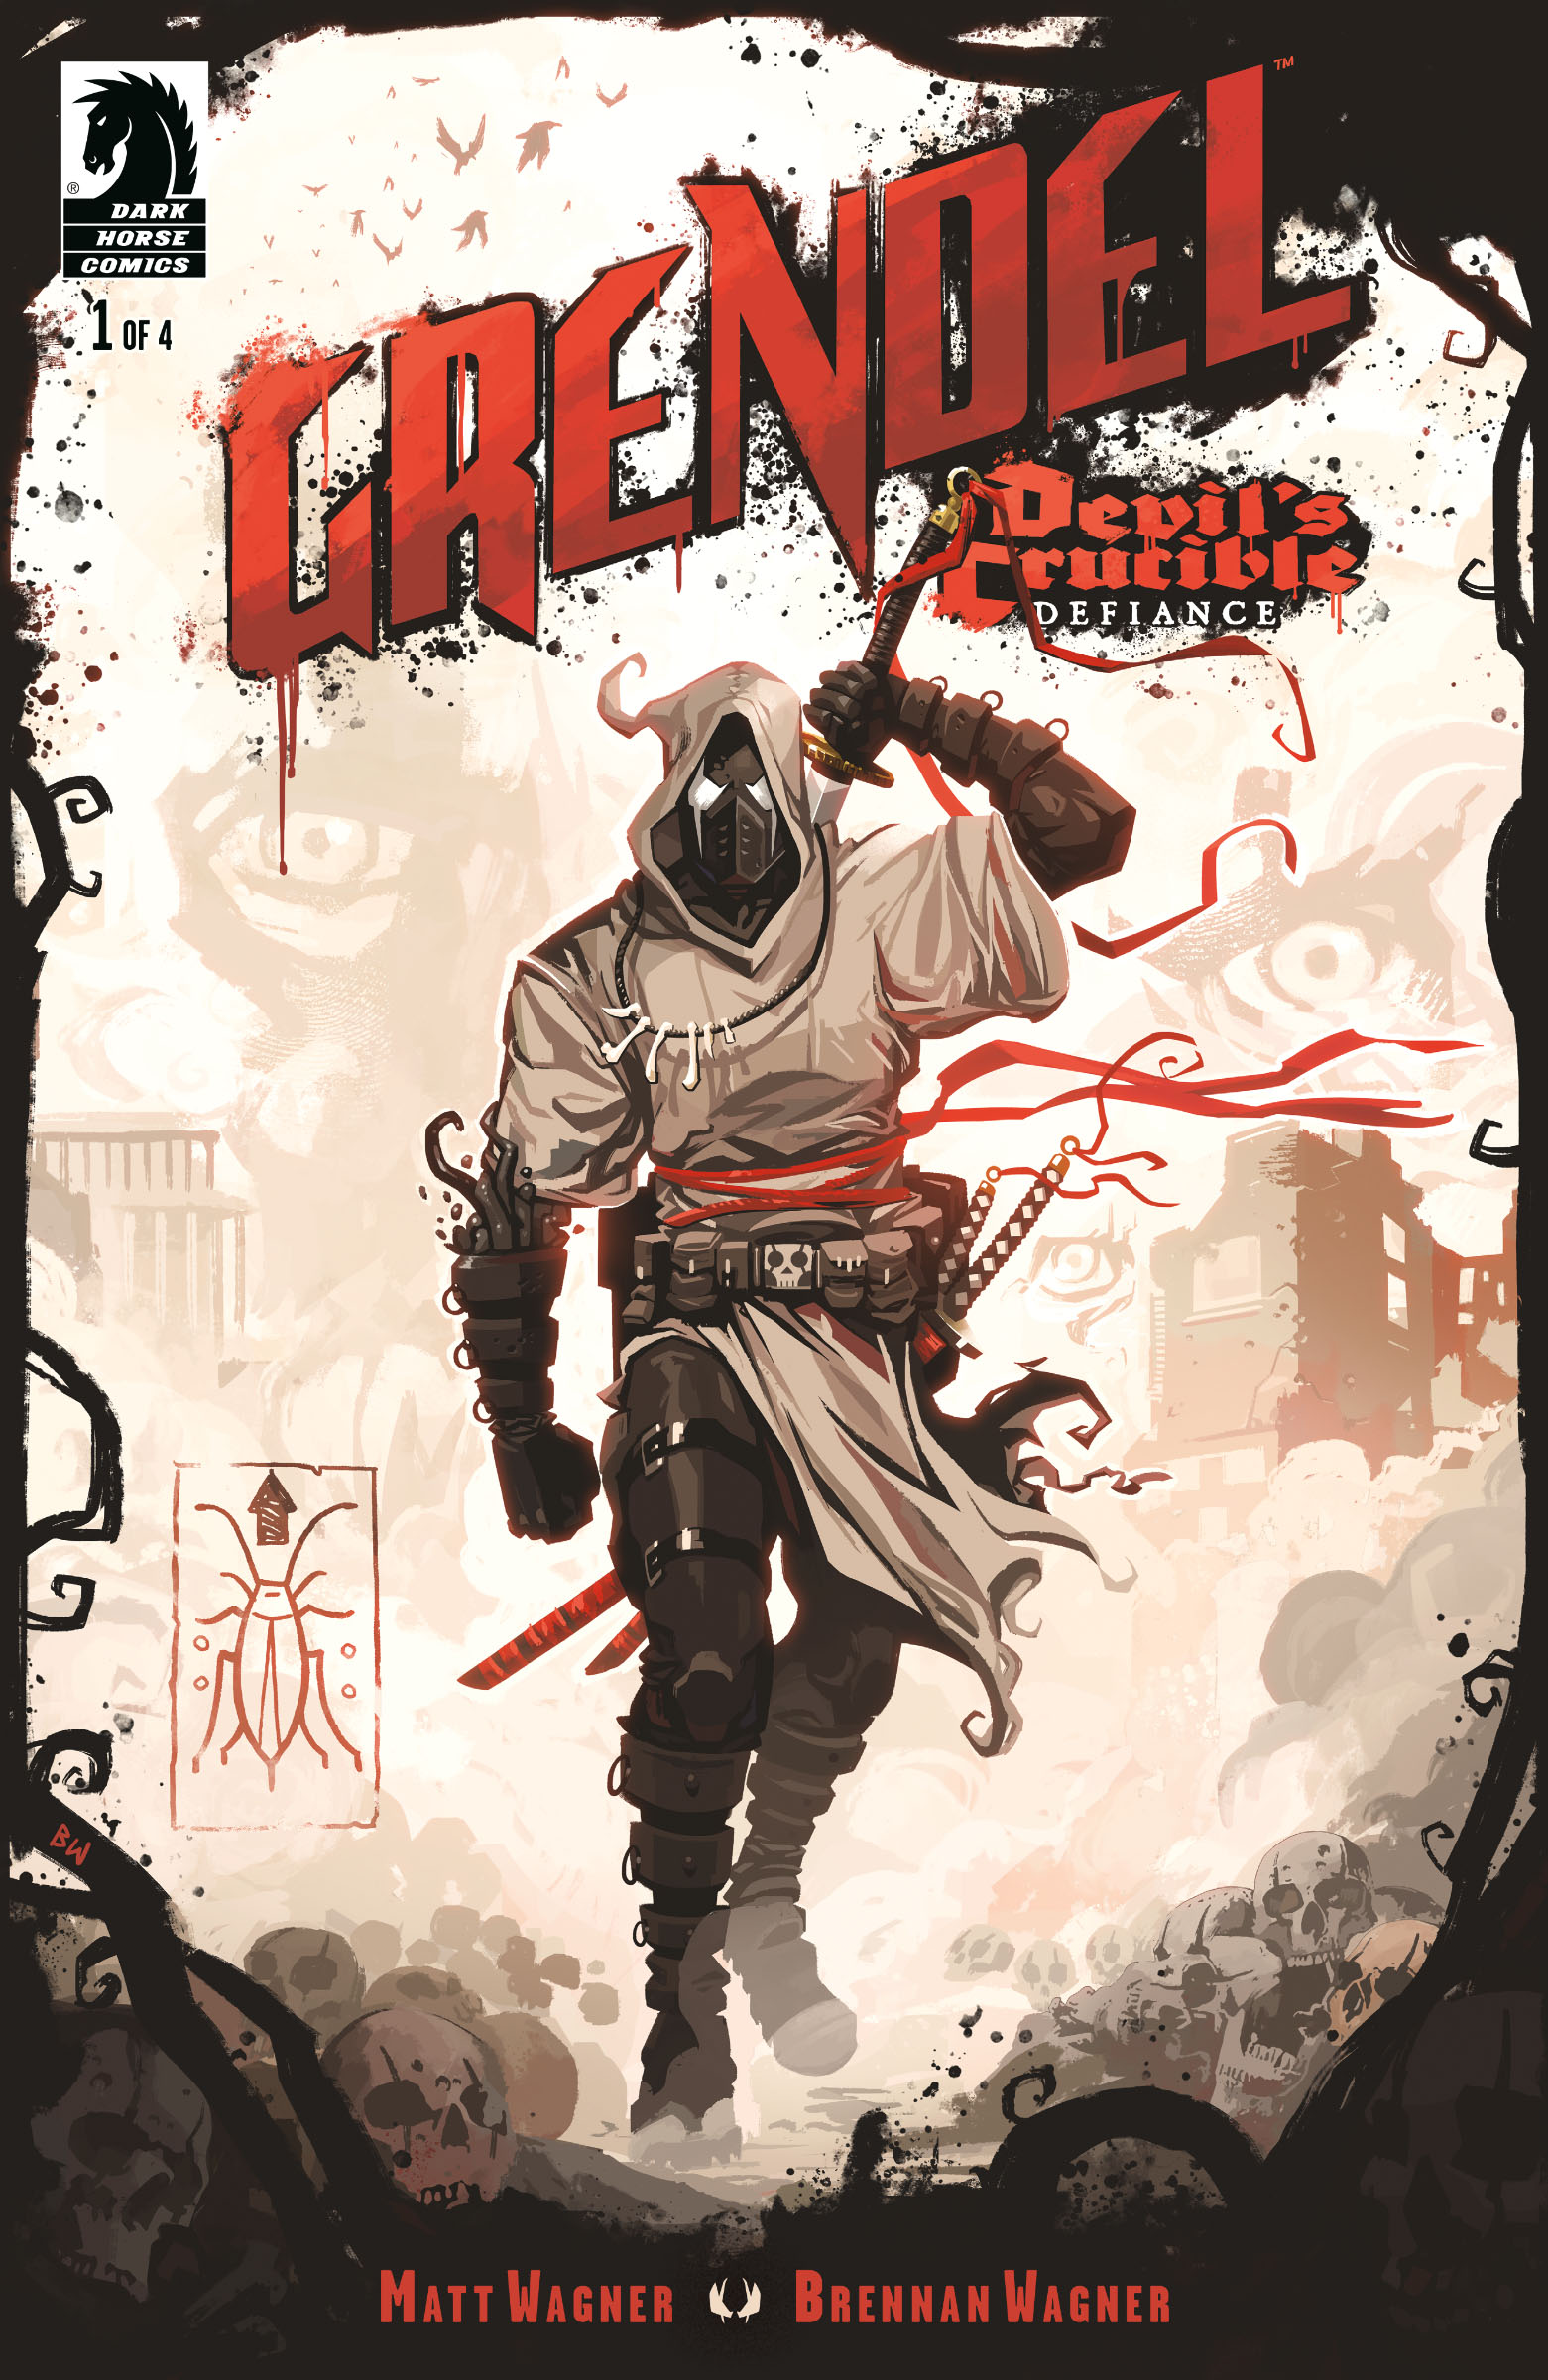 Grendel: Devil's Crucible Defiance #1 variant